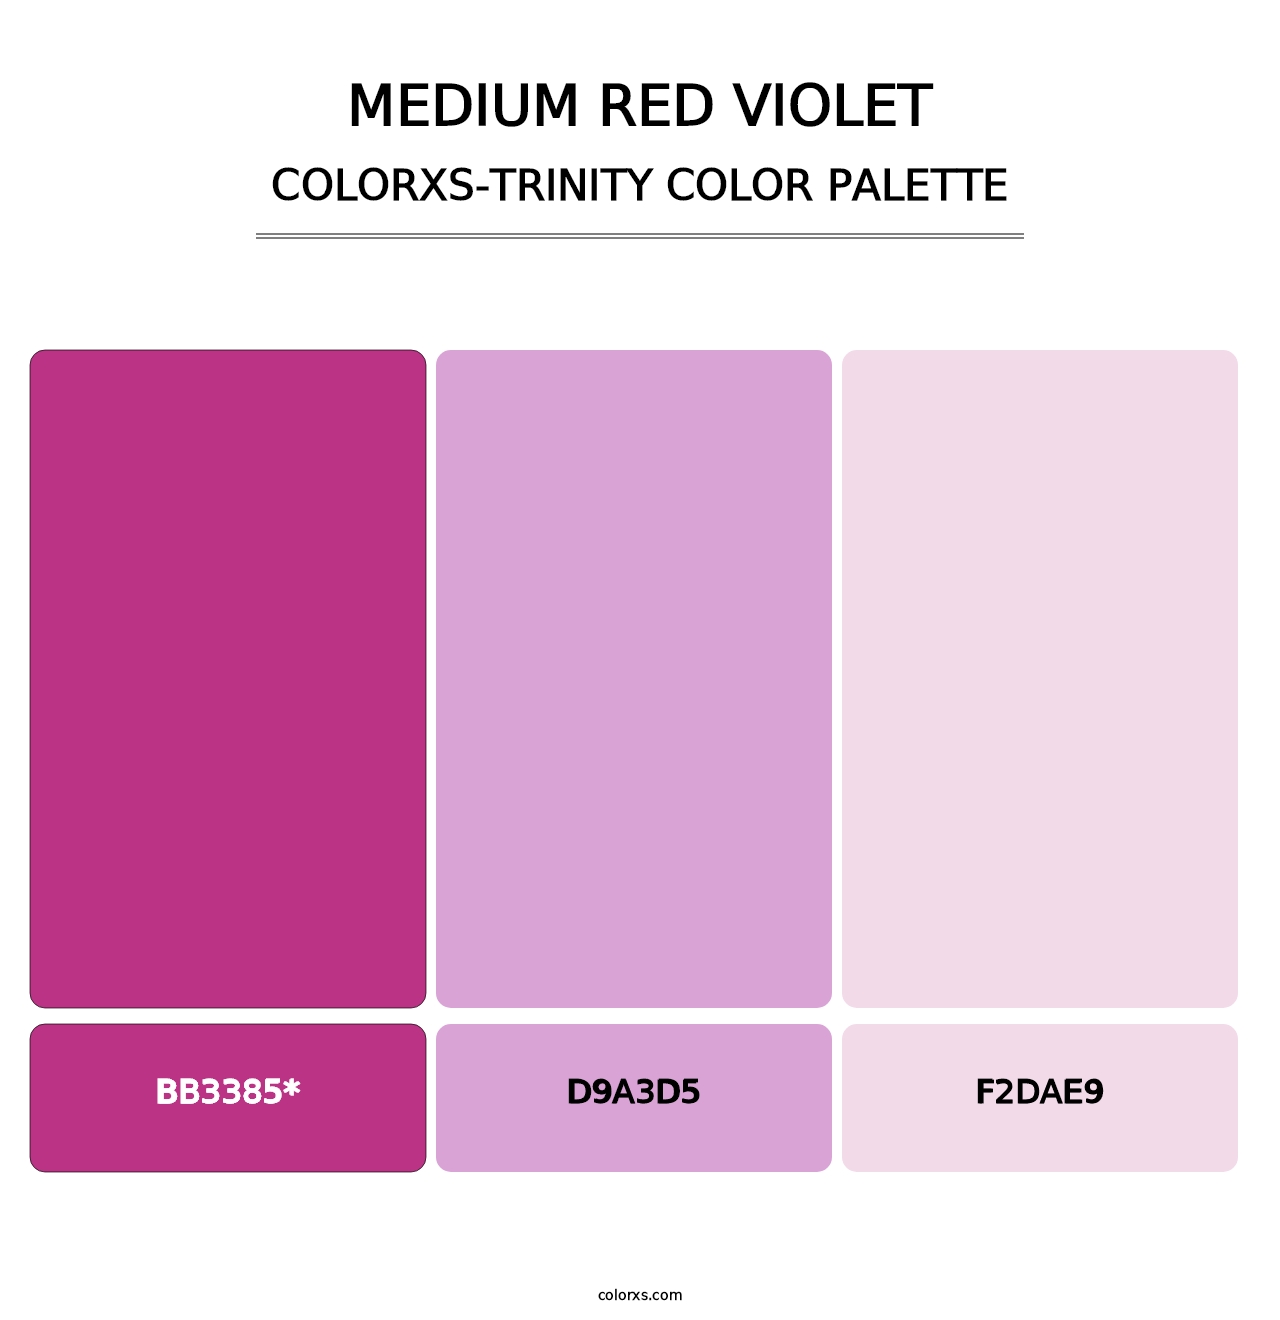 Medium Red Violet - Colorxs Trinity Palette